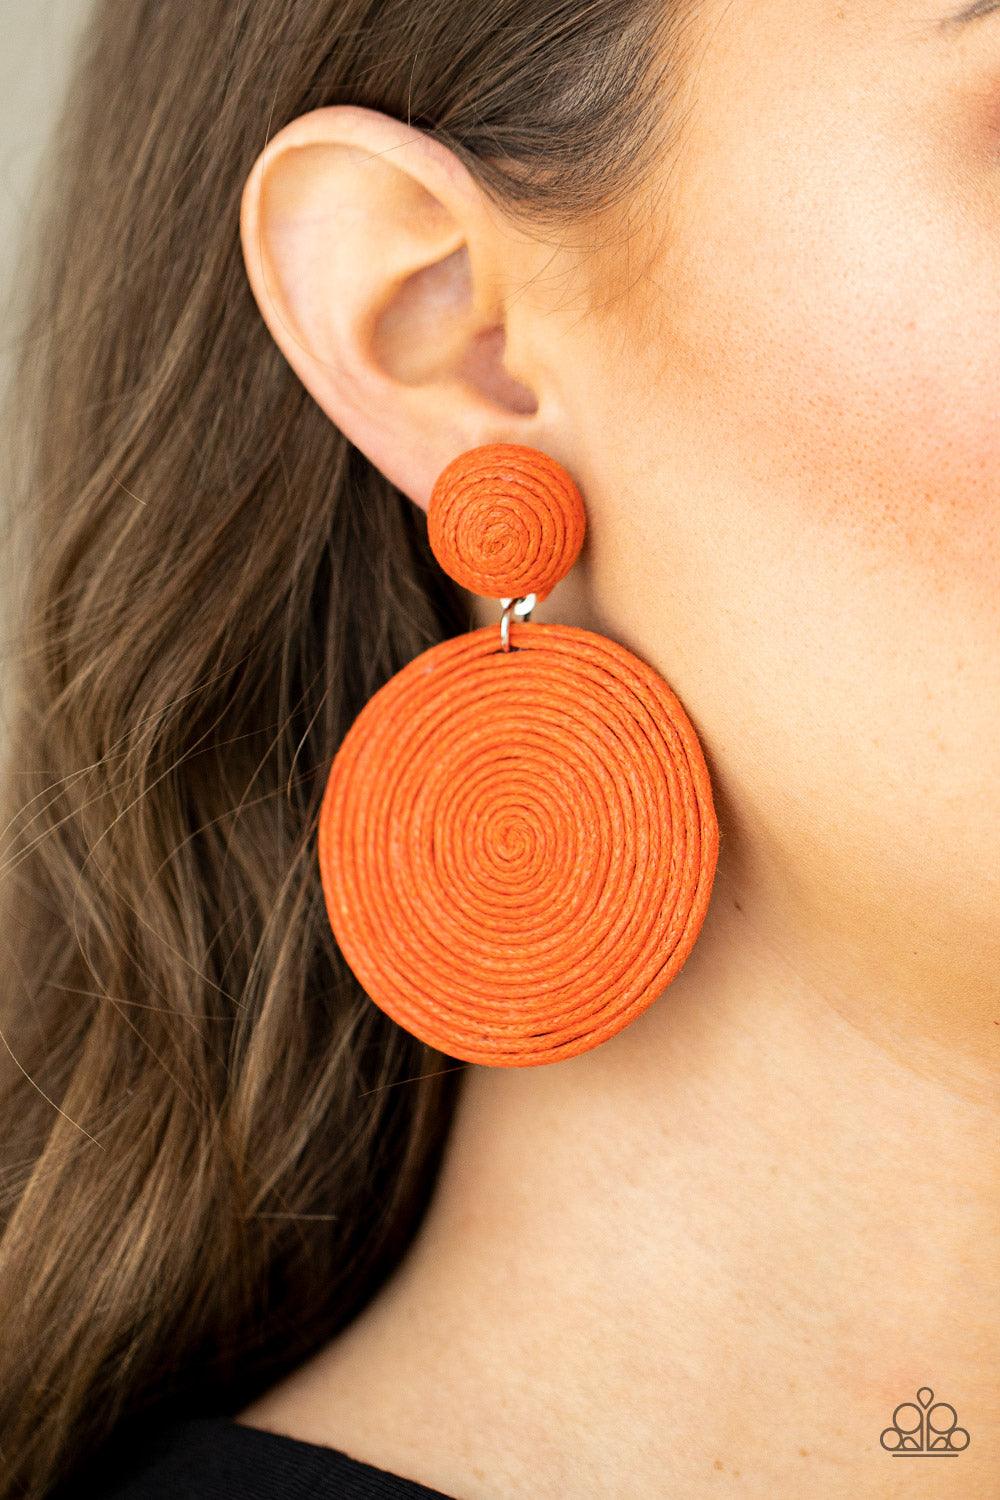 Circulate The Room Orange Earrings - Jewelry by Bretta